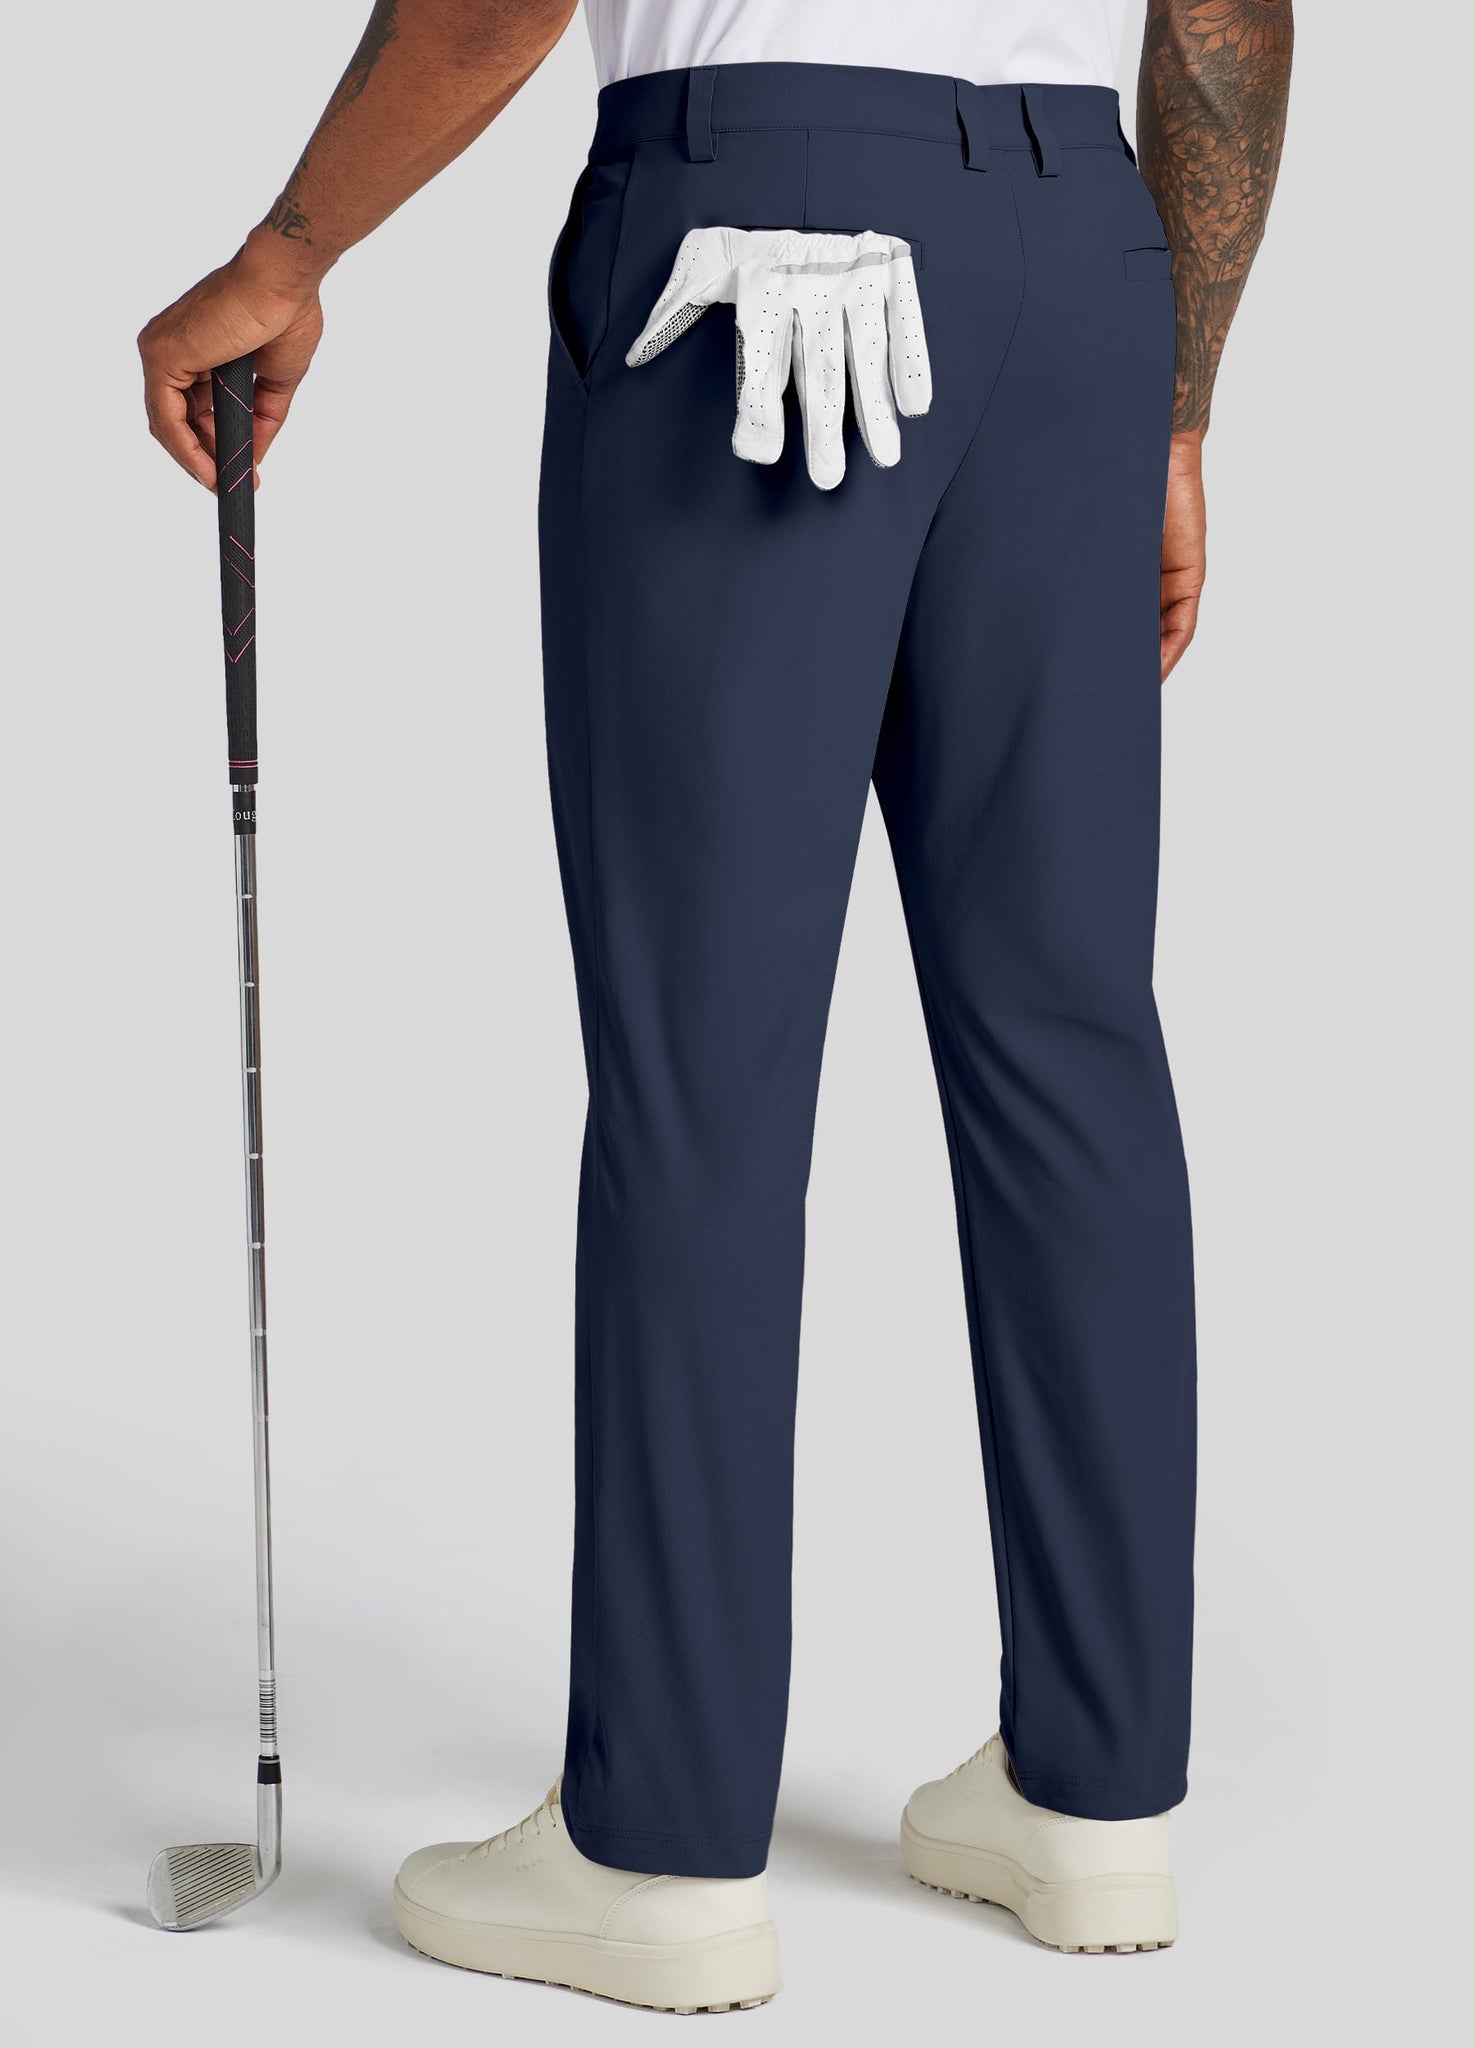 Men's Stretch Golf Pants - Tall